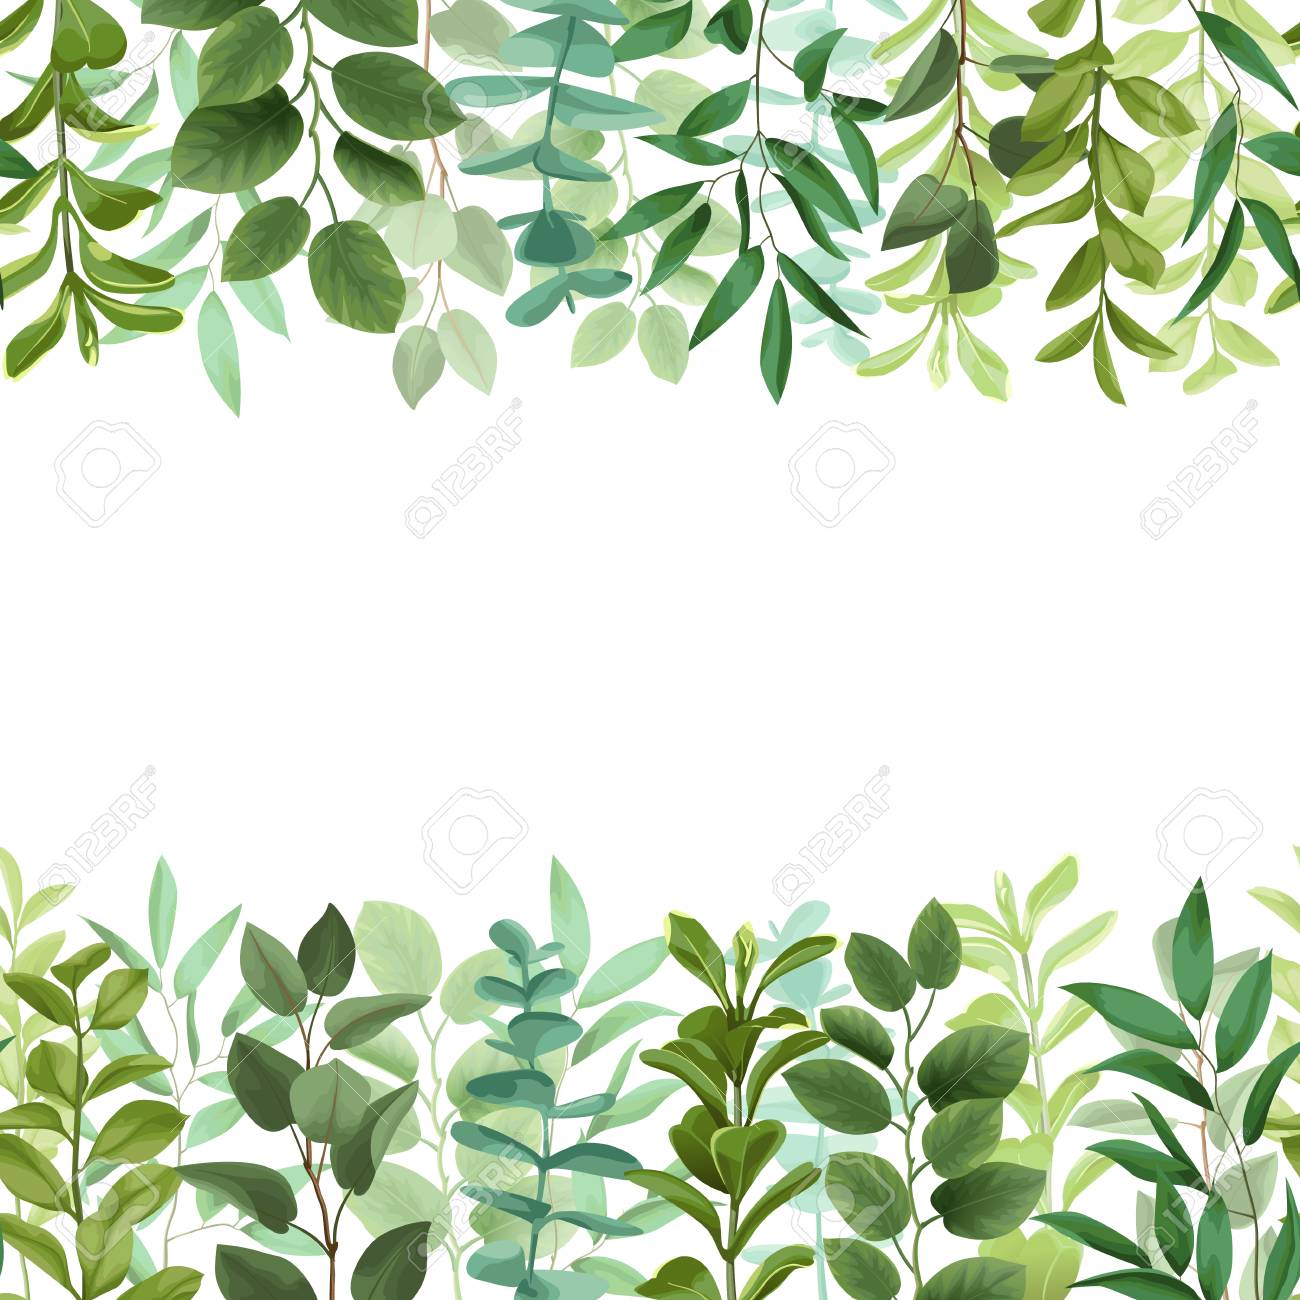 Greenery leaf seamless double border illustration on white background..